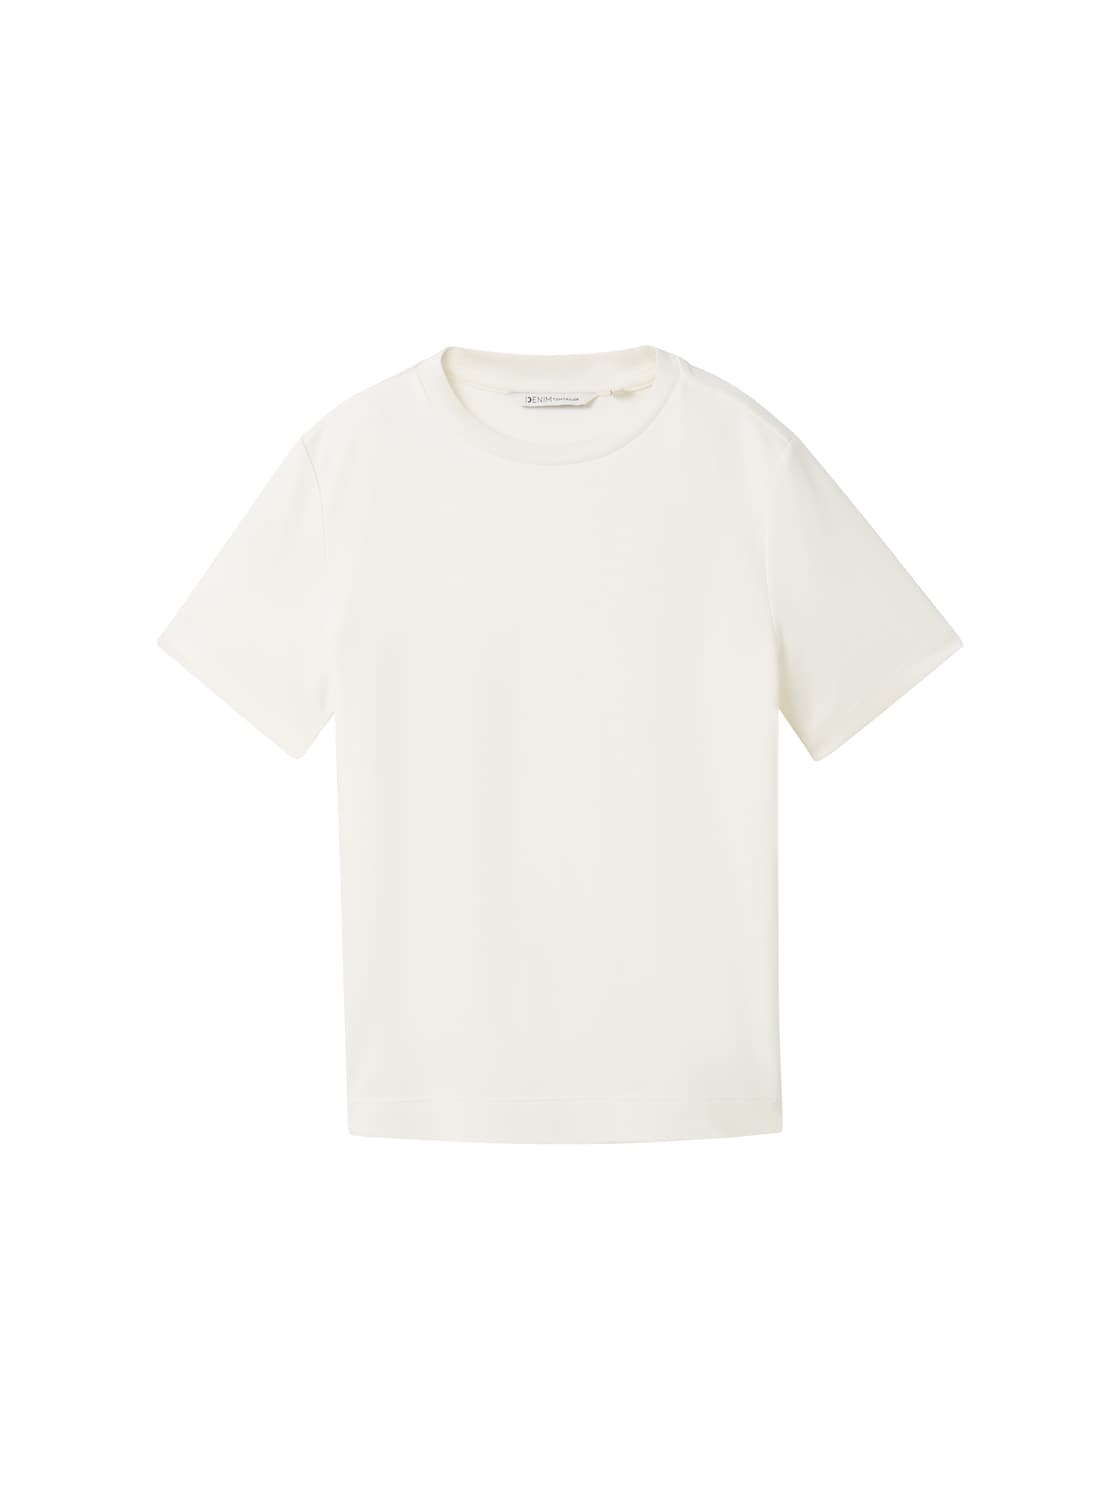 TOM TAILOR DENIM Damen Basic T-Shirt, braun, Uni, Gr. L von Tom Tailor Denim